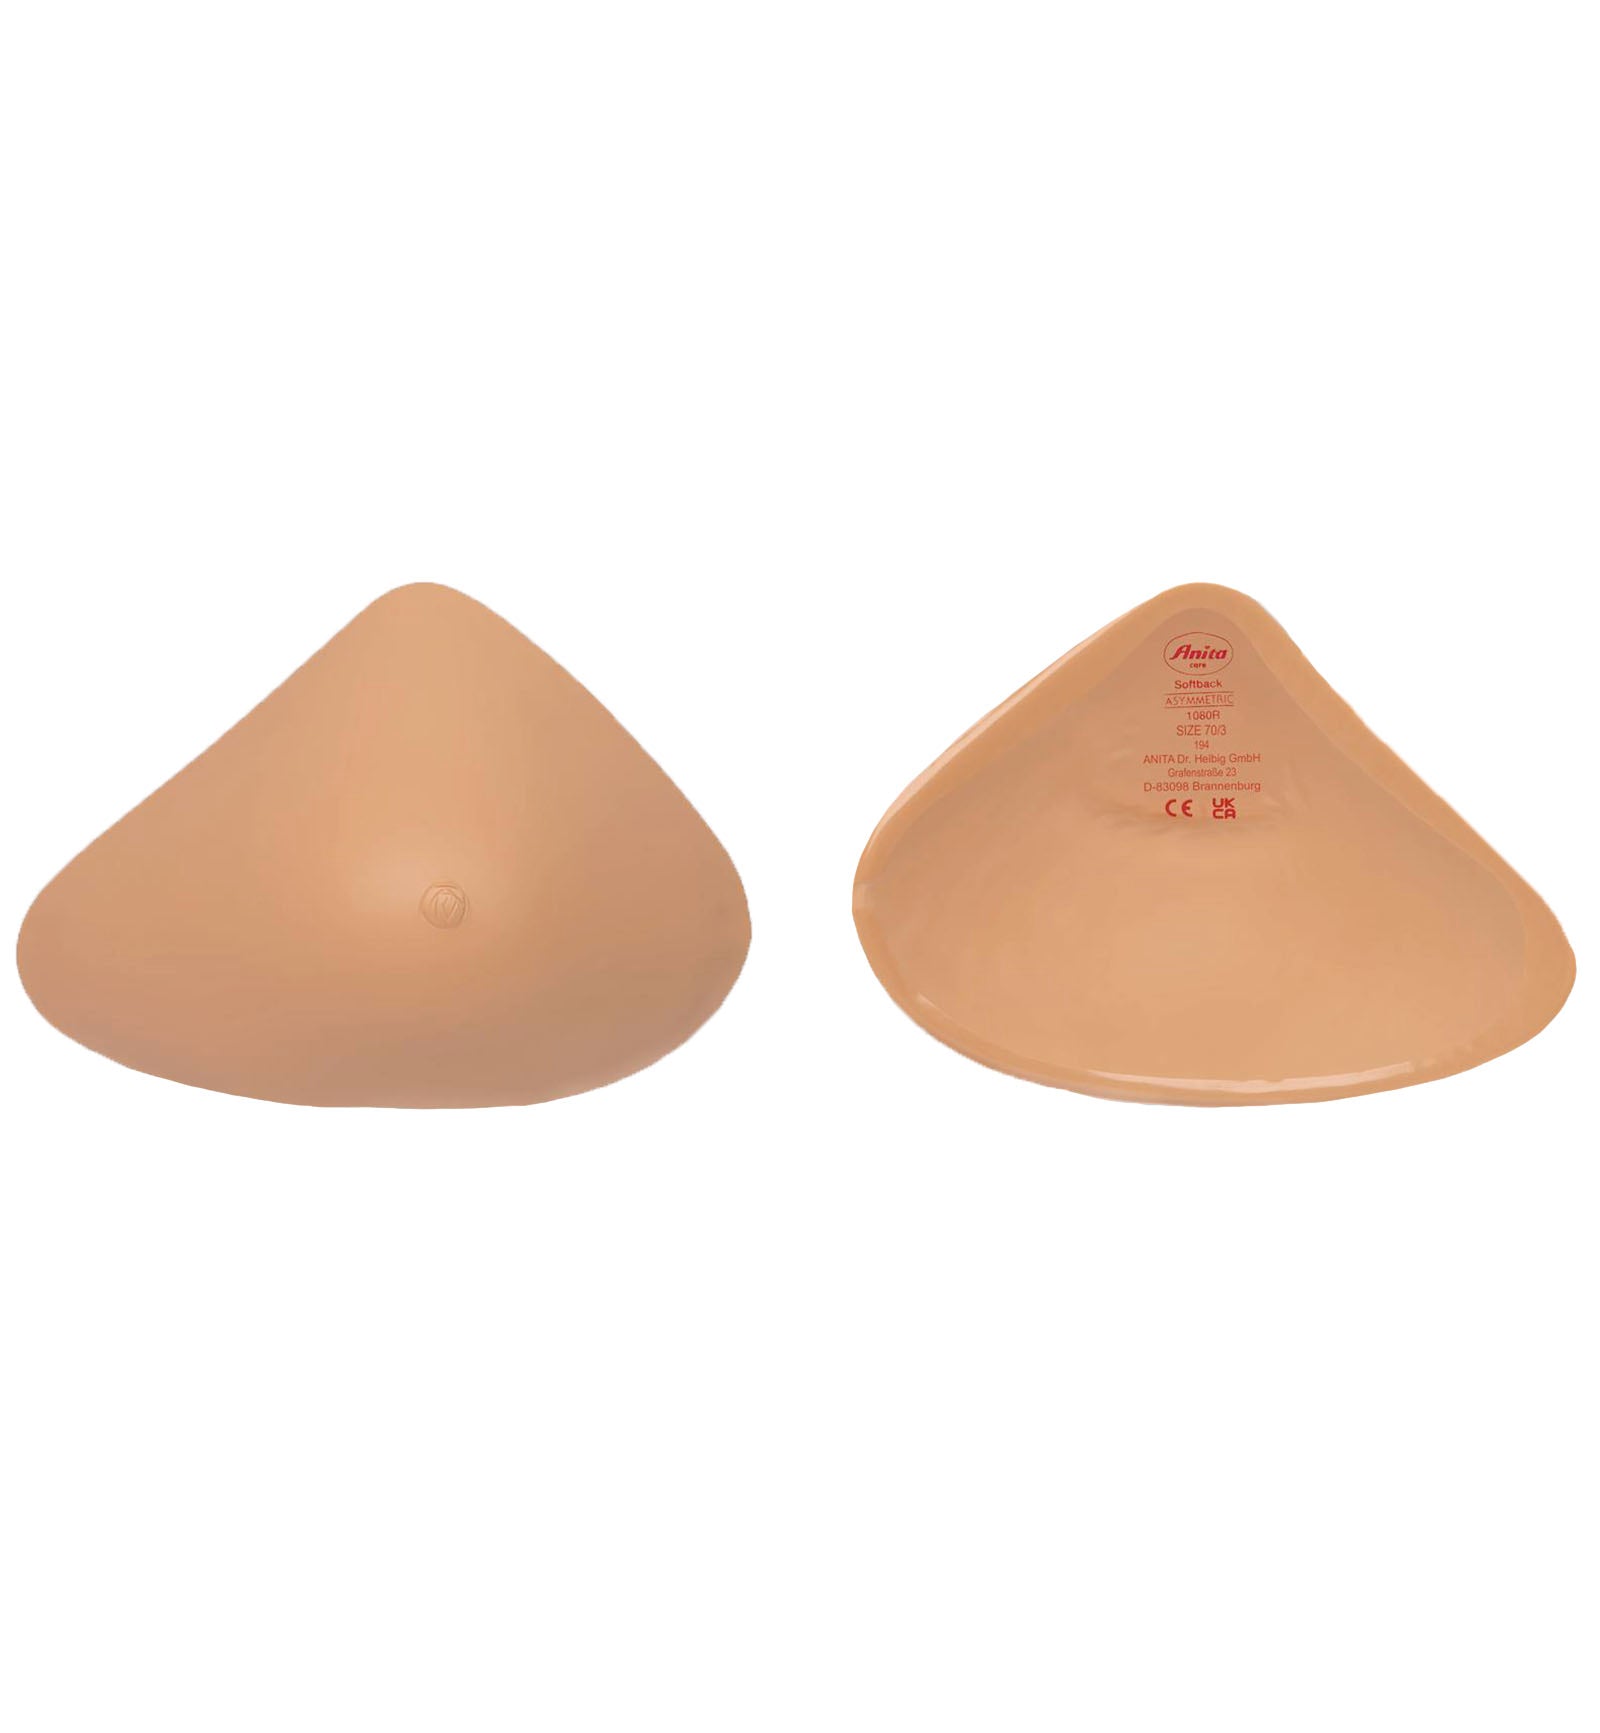 Anita Care Softback Asymmetric Double Layer Breast Form (1080R),Size 7,Right - Right,7